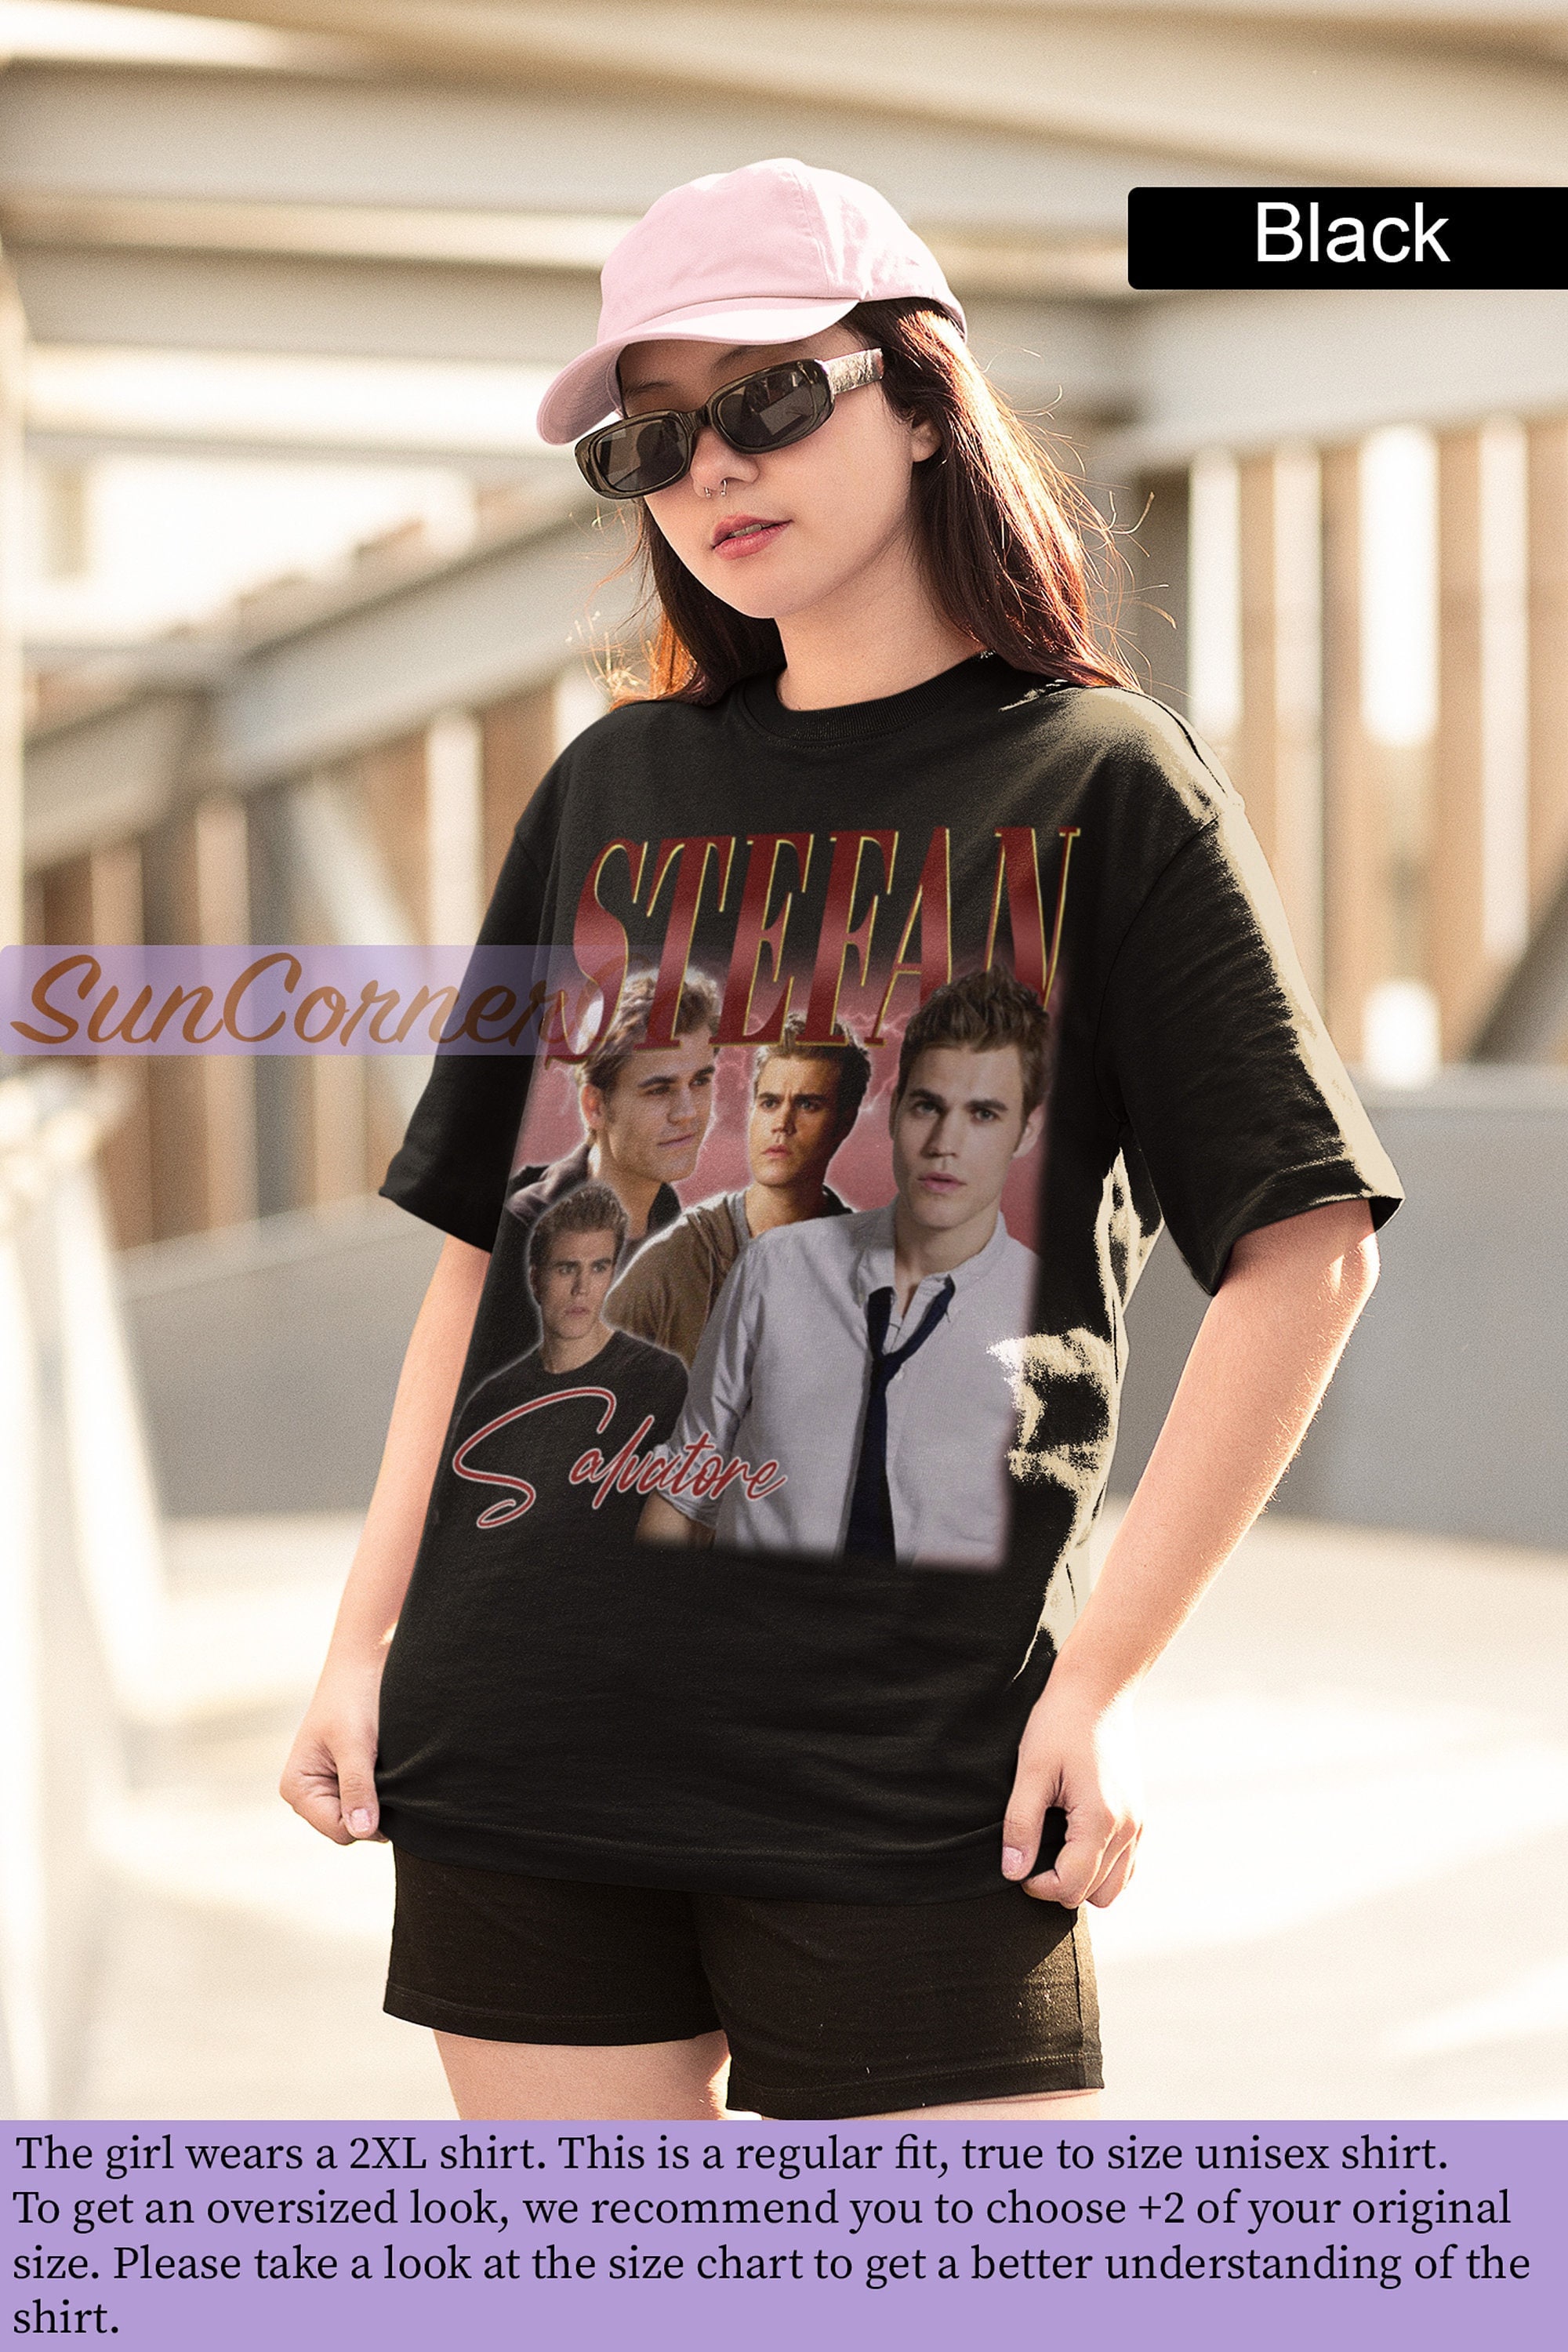 Damon Salvatore Elena Gilbert Stefan Salvatore T-shirt The Vampire Diaries,  Season 1, T-shirt transparent background PNG clipart